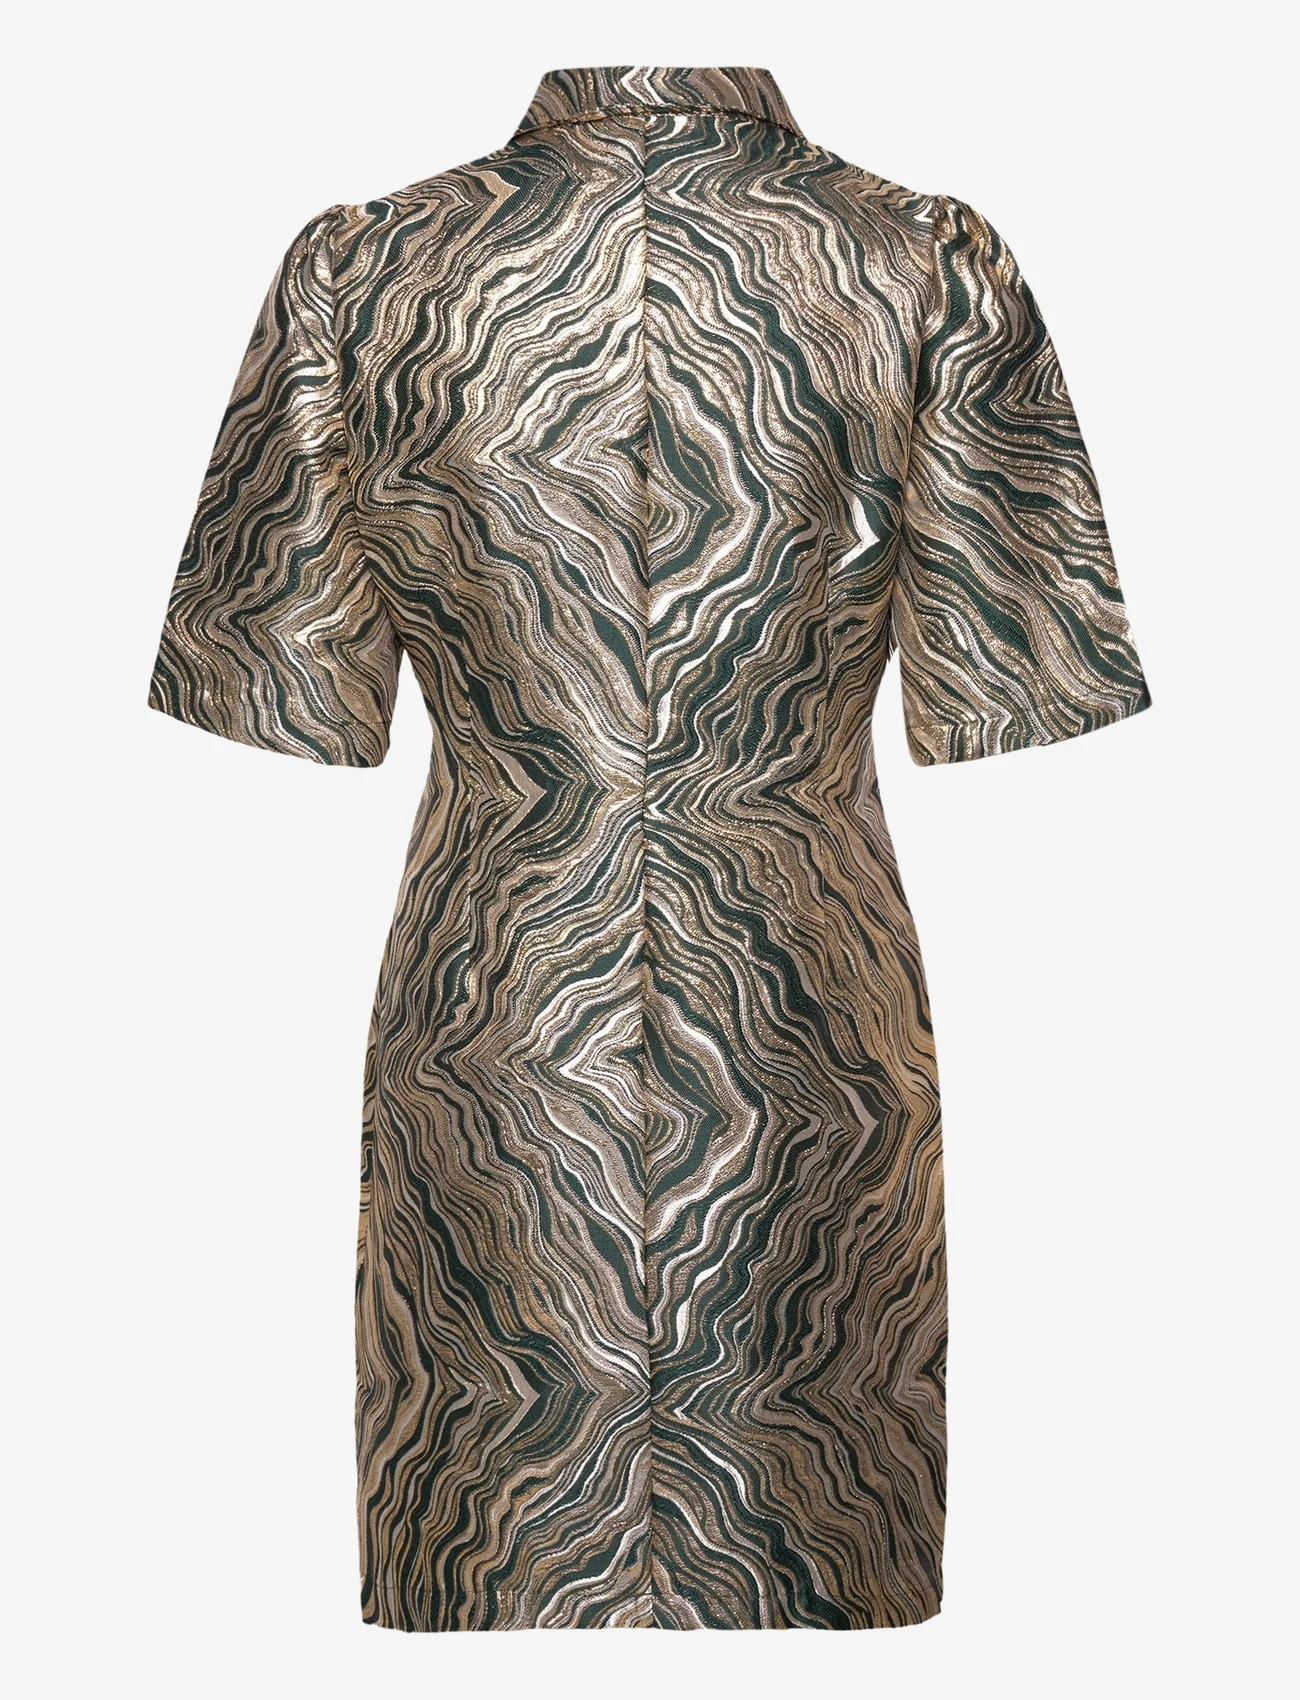 Minus - MSEvelina Jacquard Short Dress - feestelijke kleding voor outlet-prijzen - jungle green jacquard - 1